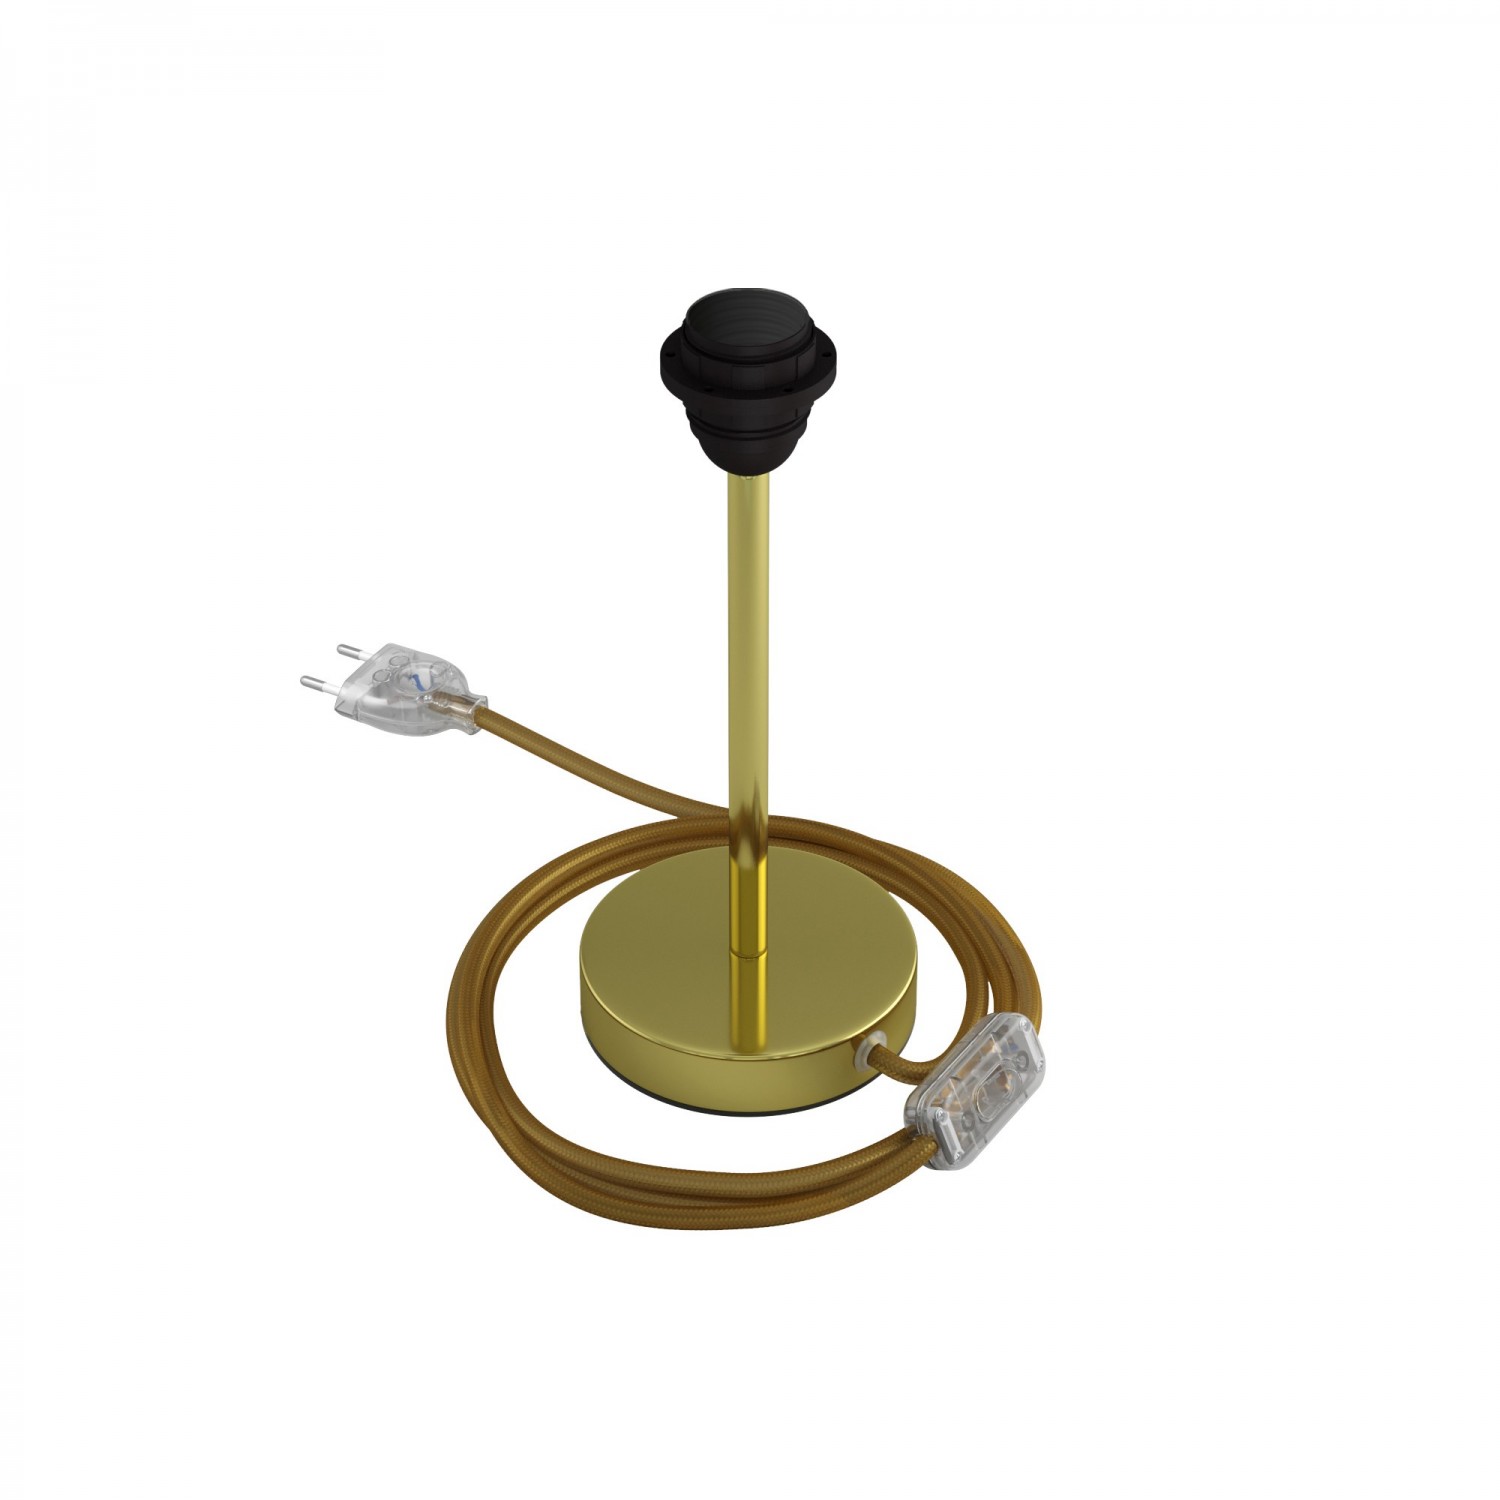 Alzaluce til lampeskærm - Bordlampe i metal